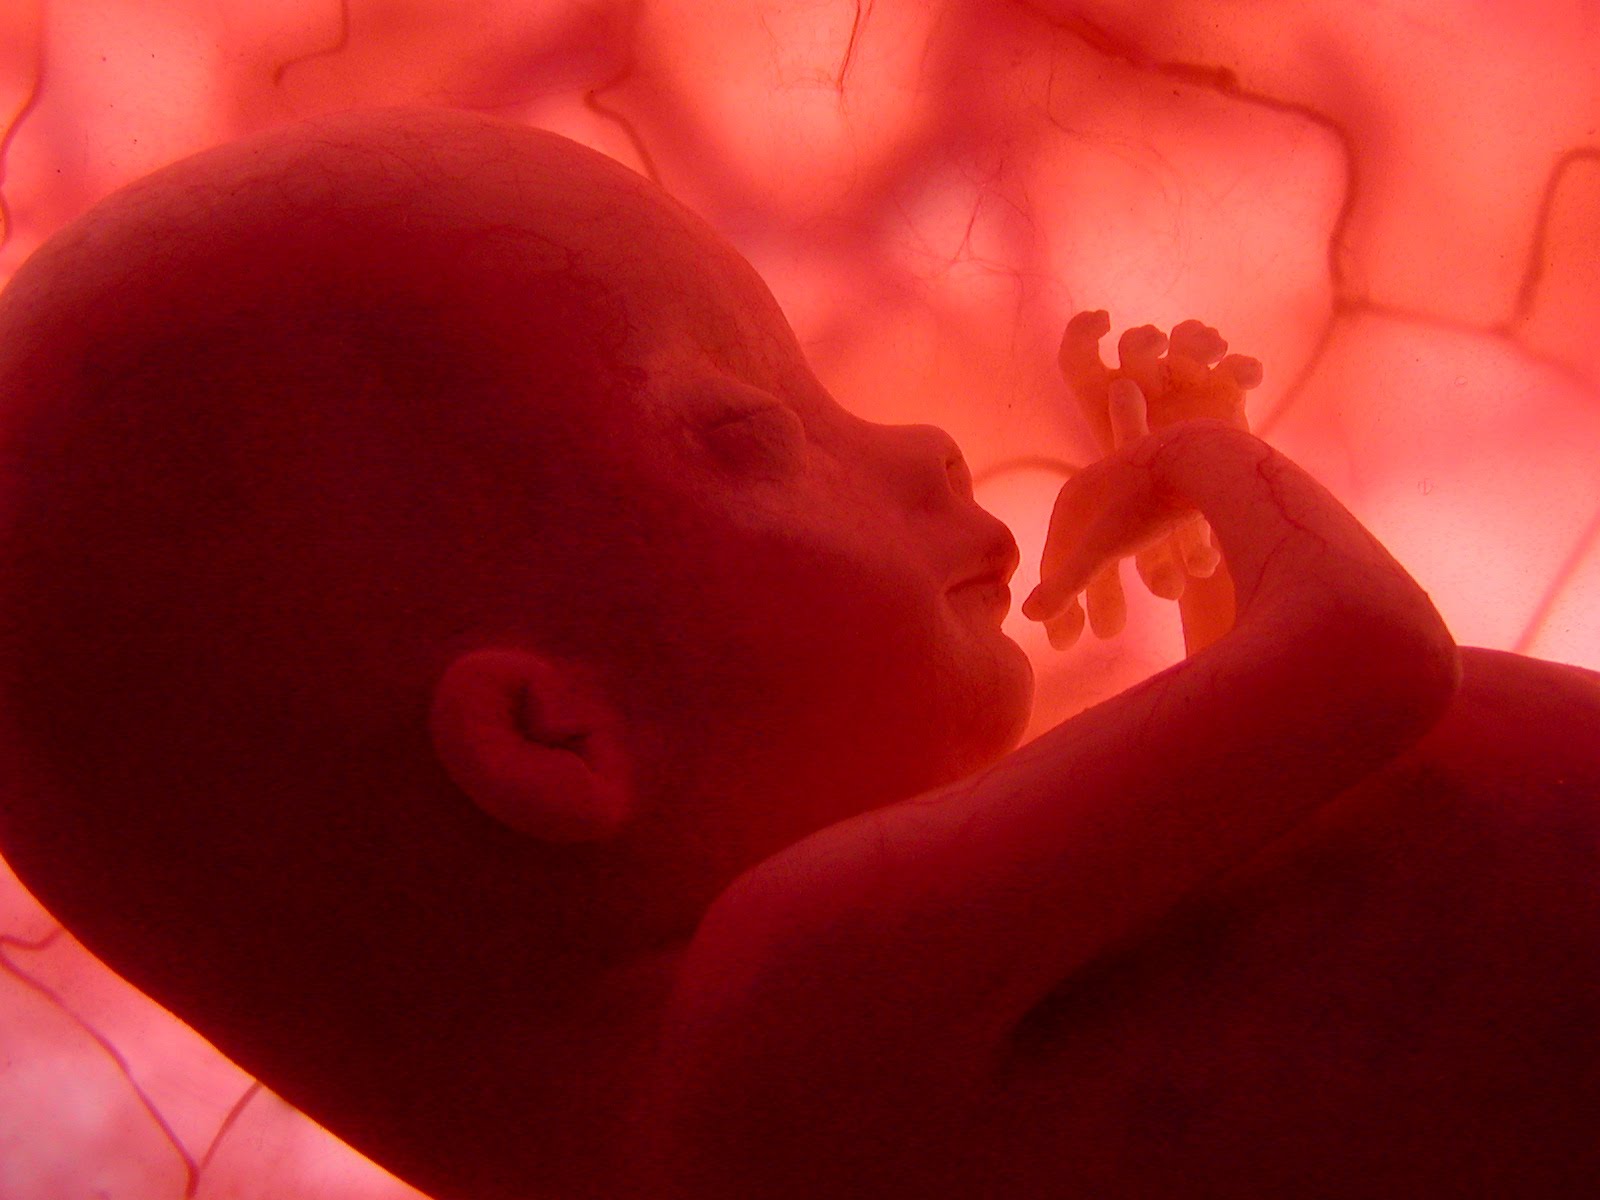 abort_embrio.jpg